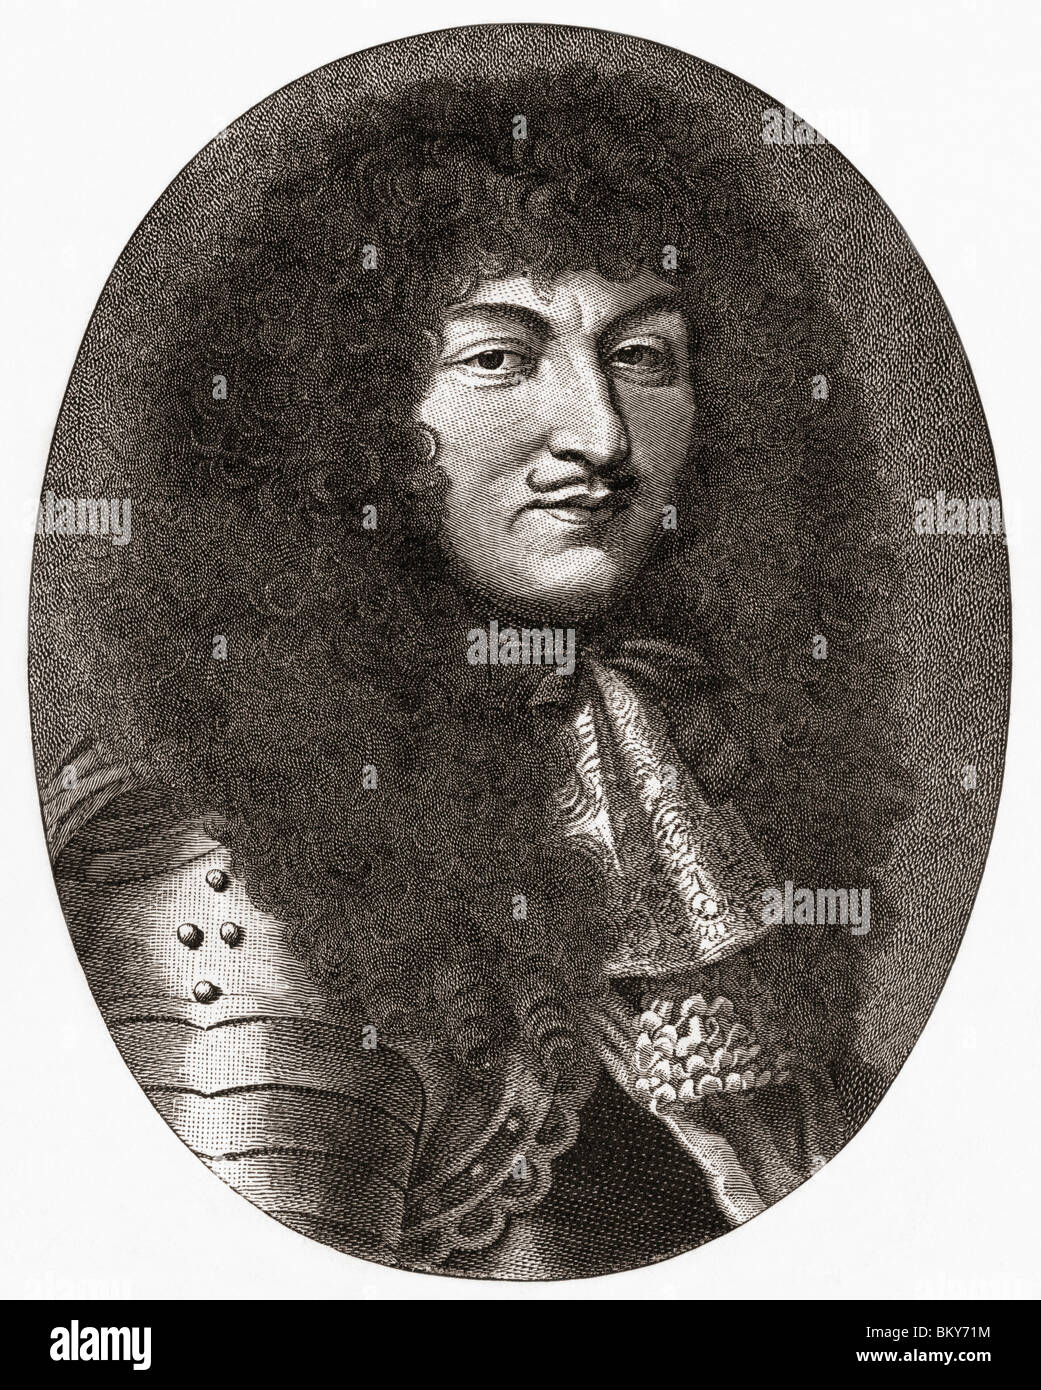 NPG D11965; Louis XIV ('The Sun King'), King of France - Portrait